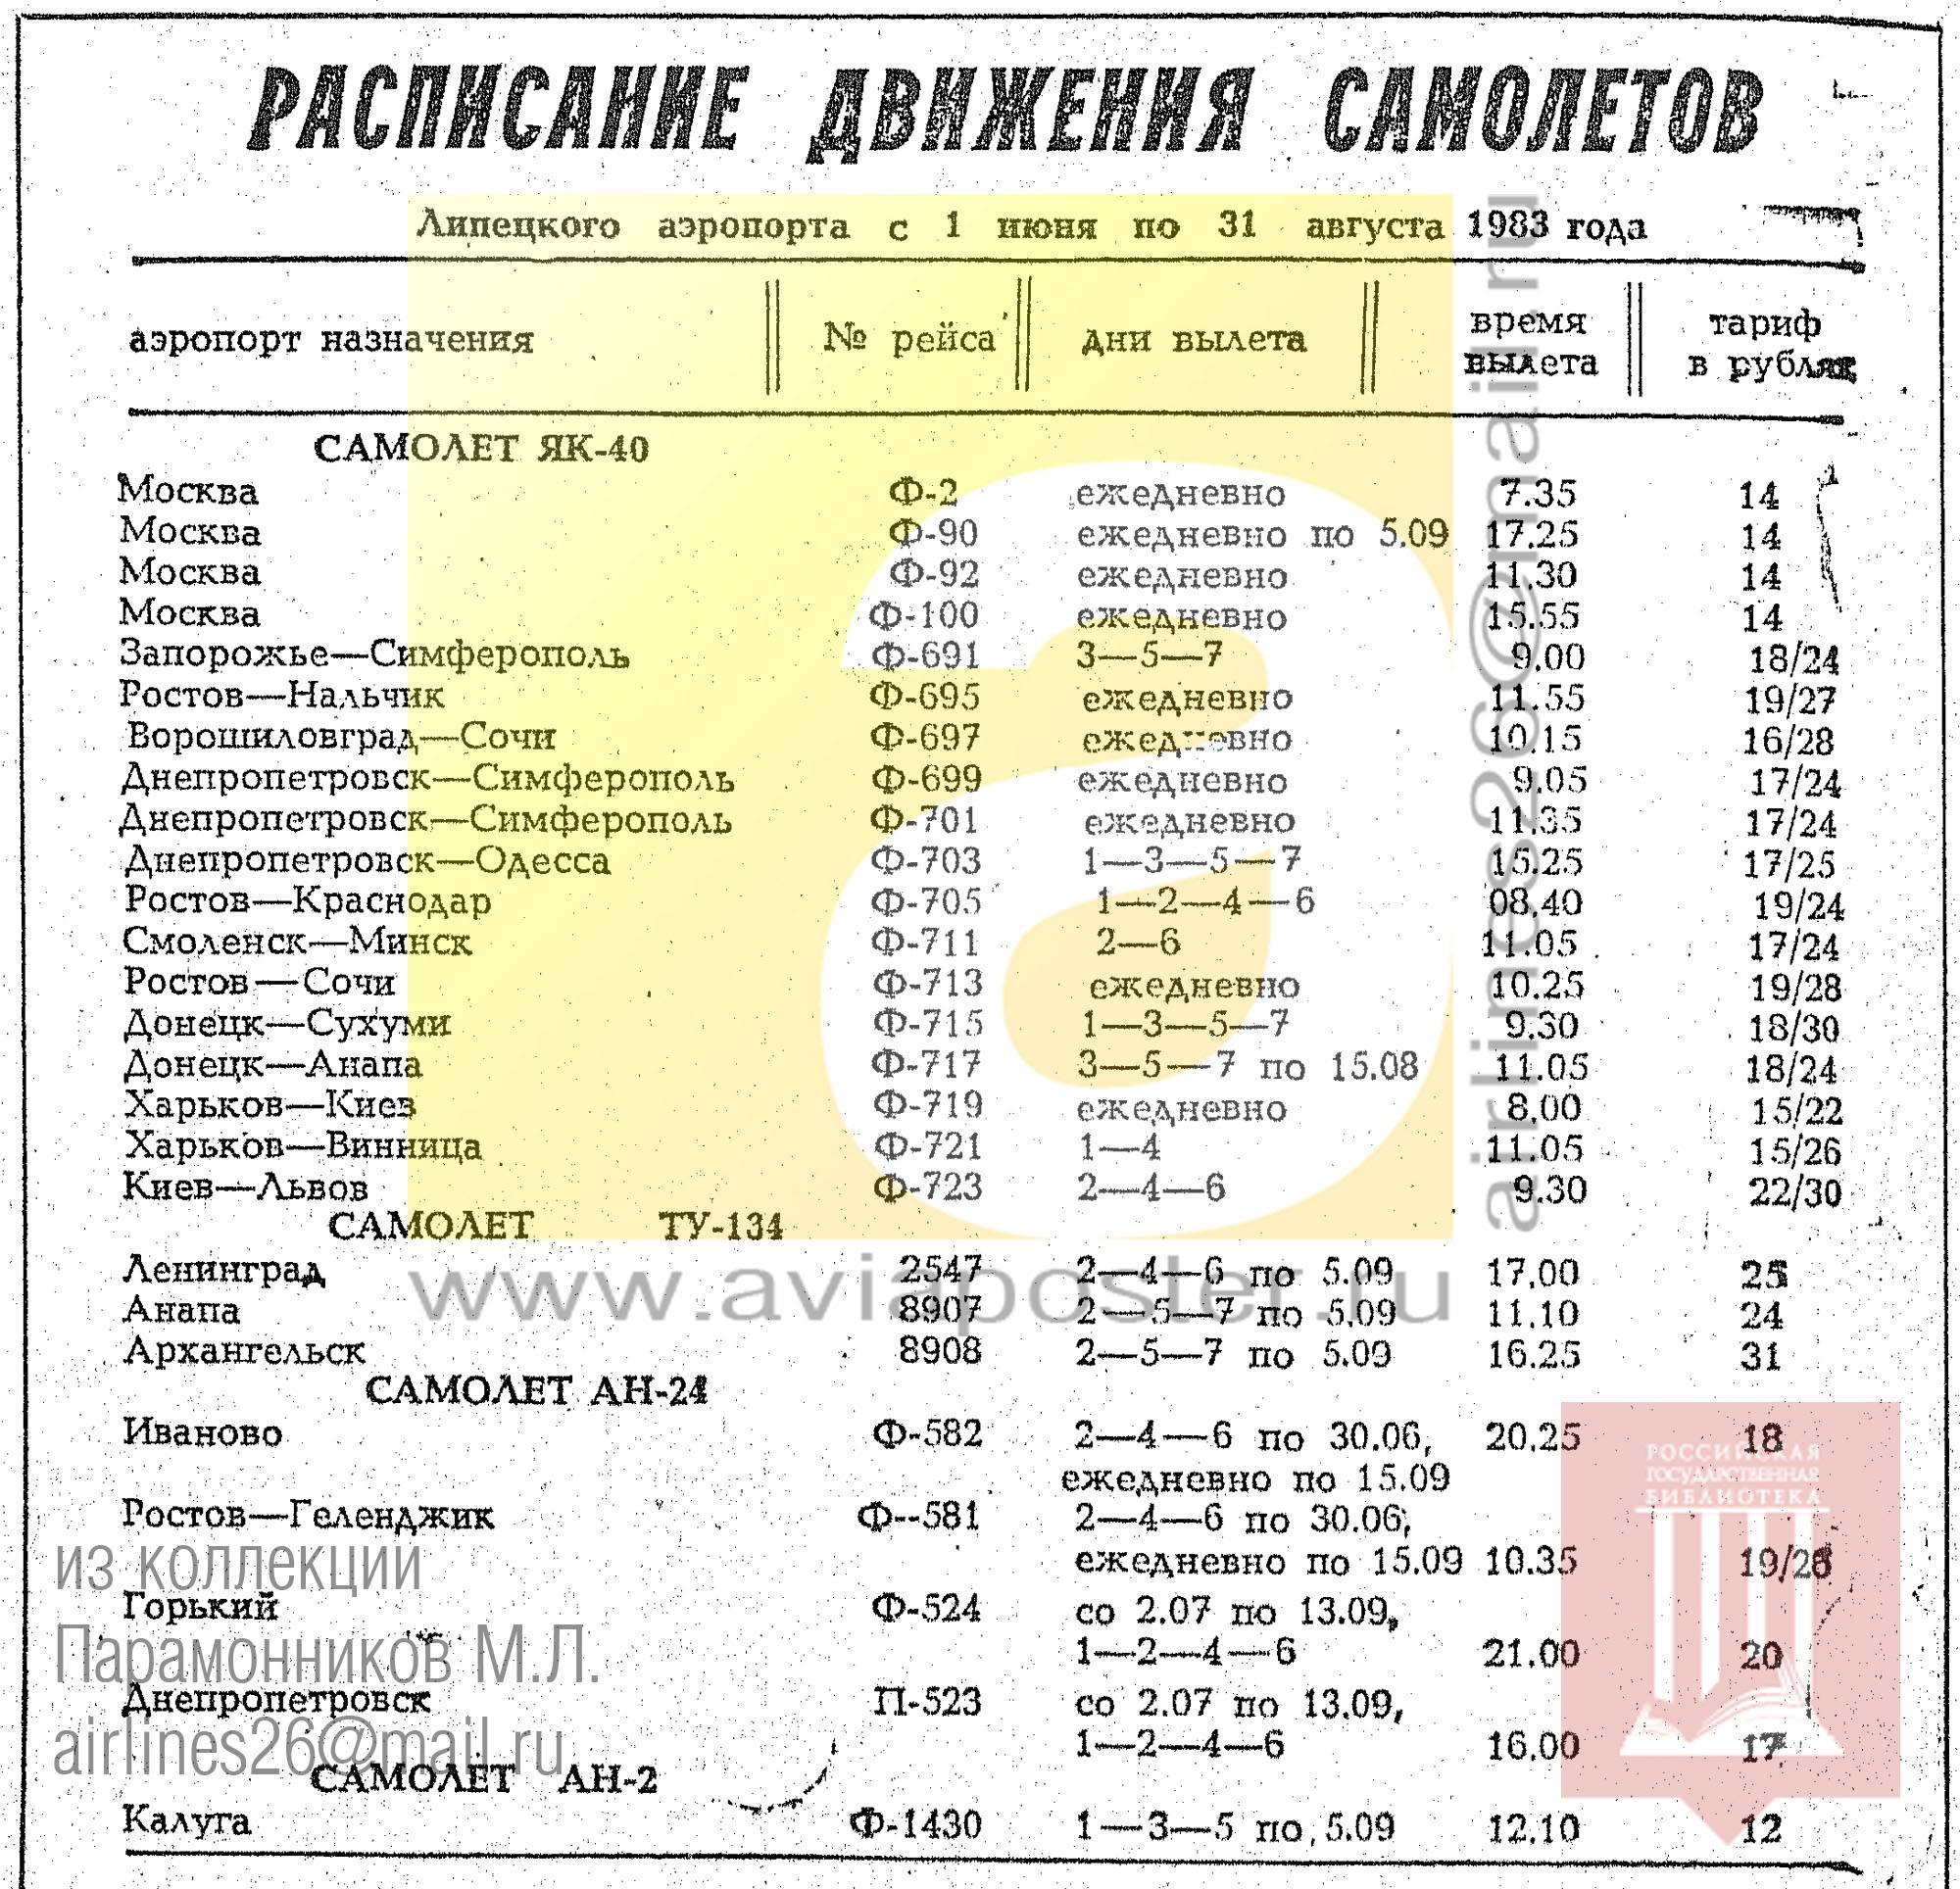 Расписание авиабилетов москва иваново цена на авиабилеты киров адлер